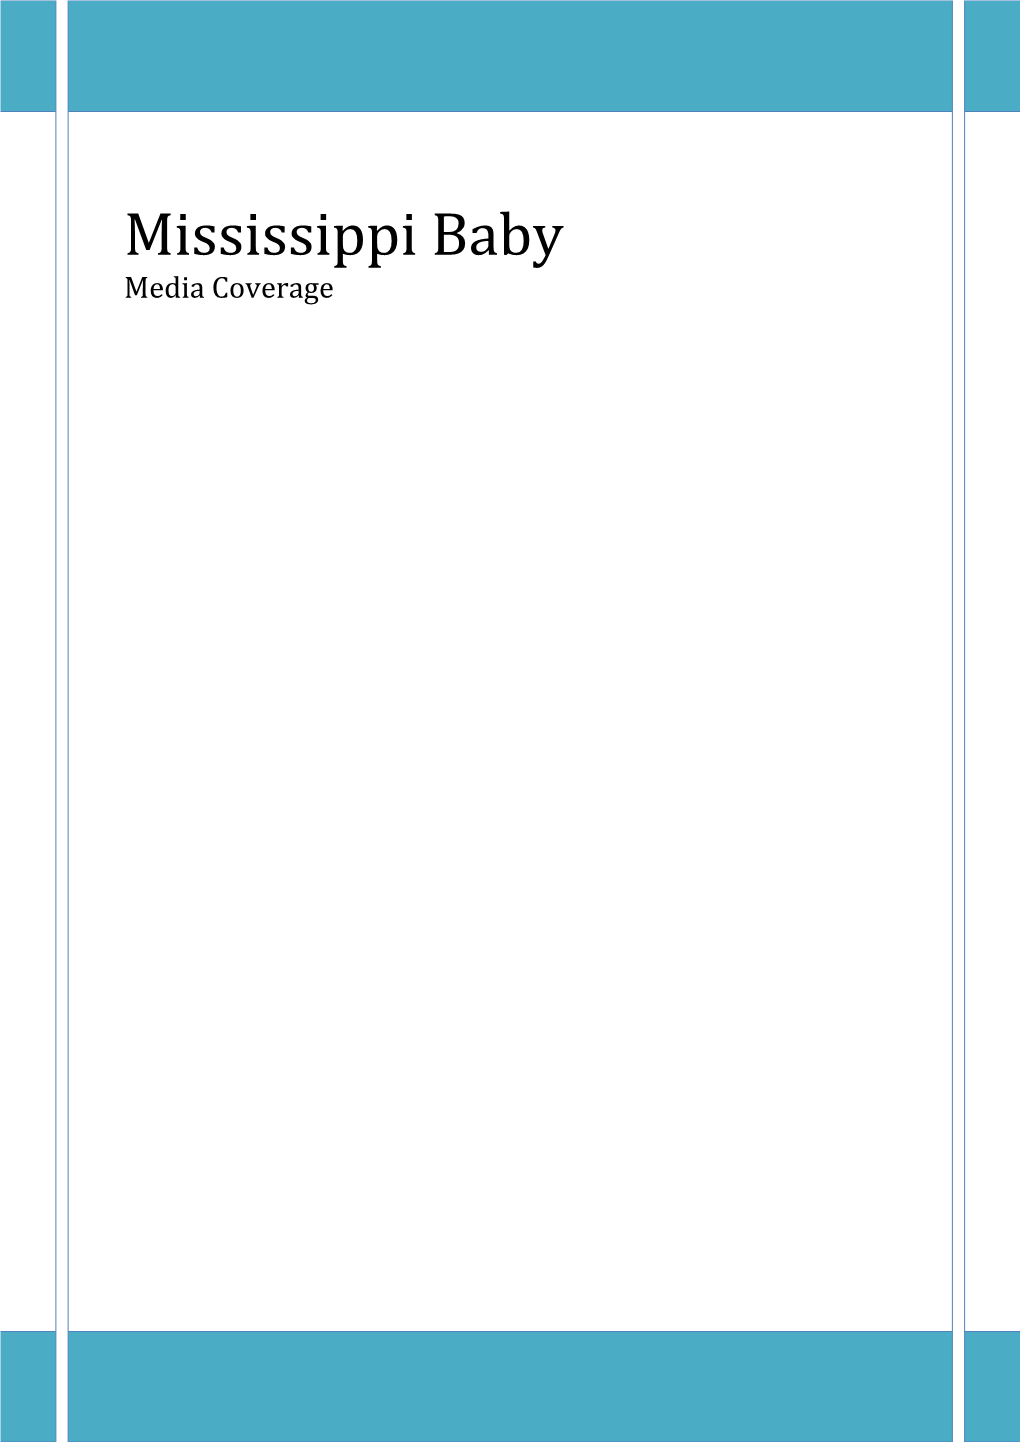 Mississippi Baby Media Coverage